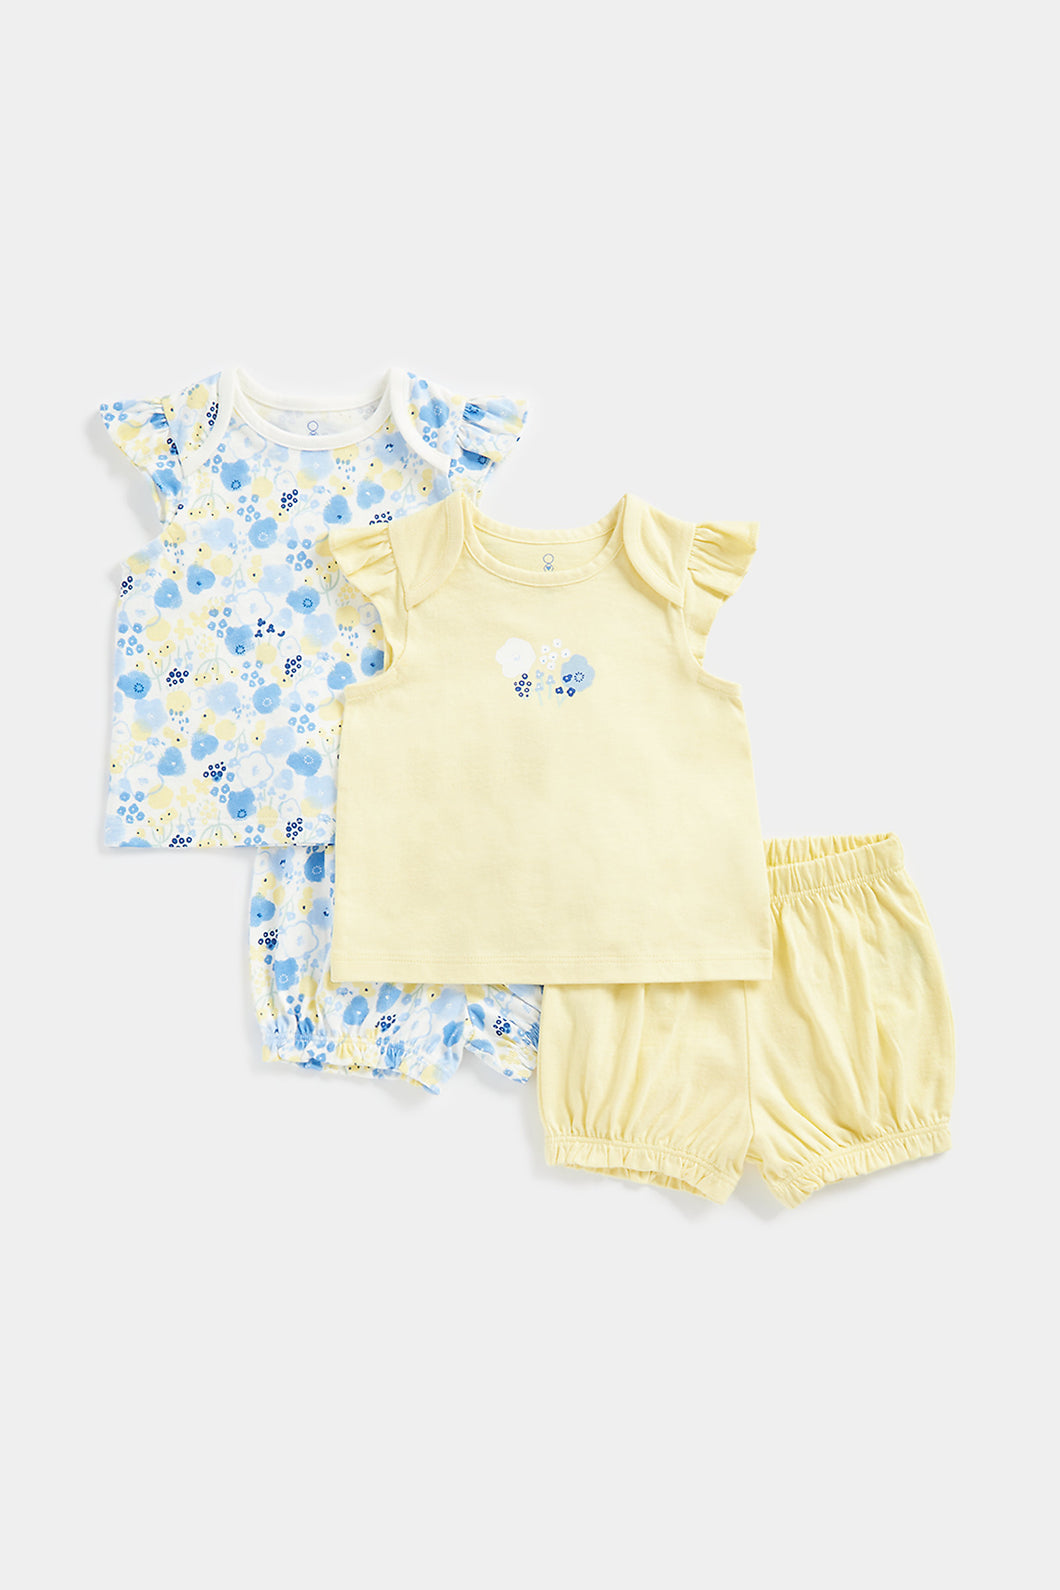 Mothercare Flower Garden Shortie Pyjamas - 2 Pack